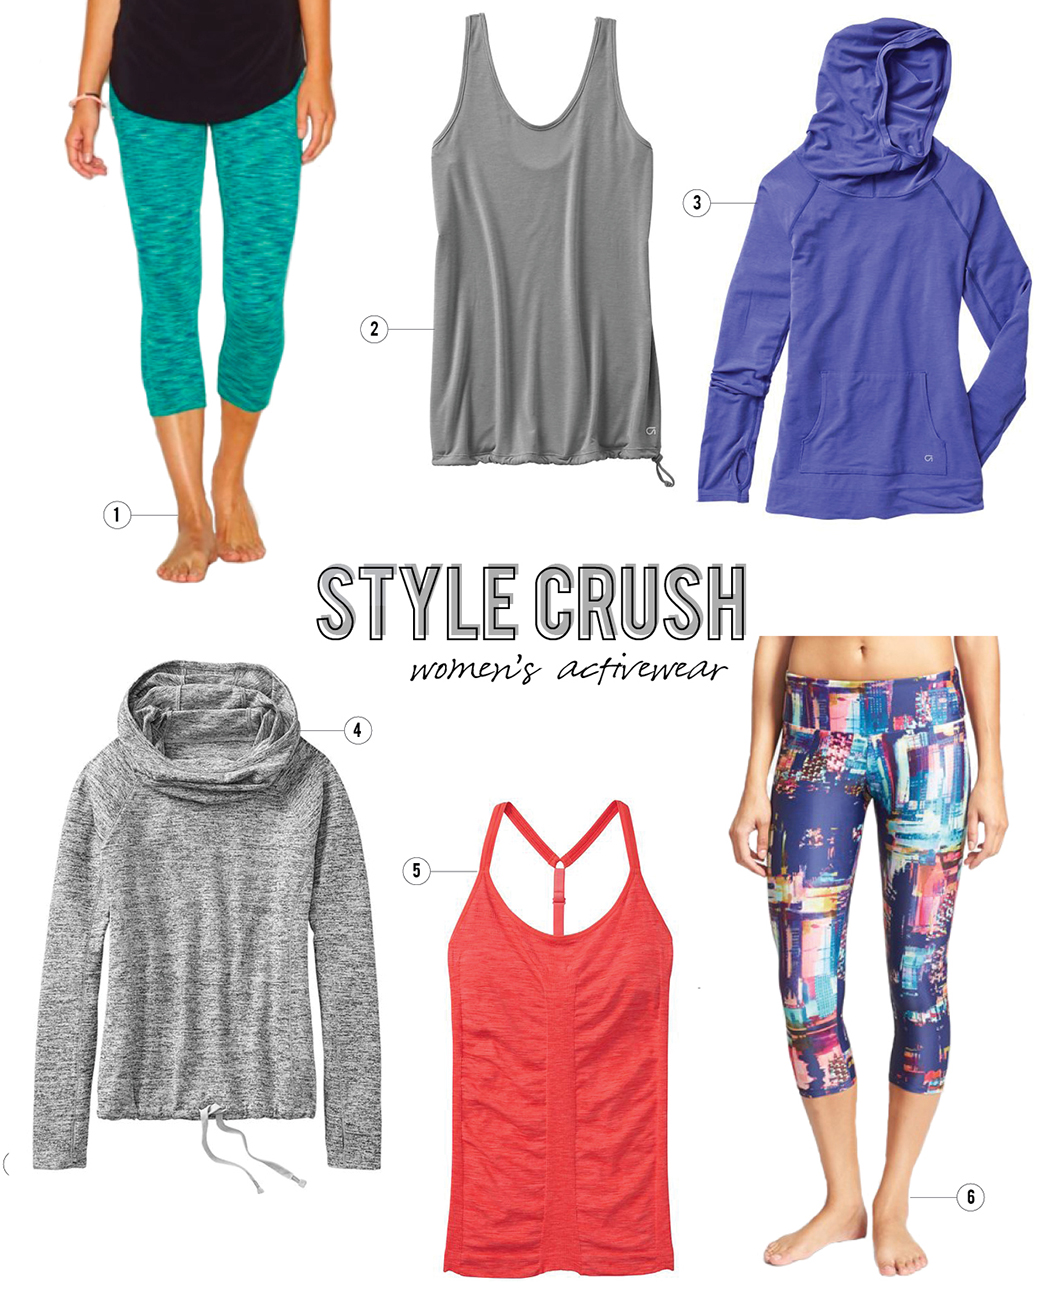 Style Crush activewear